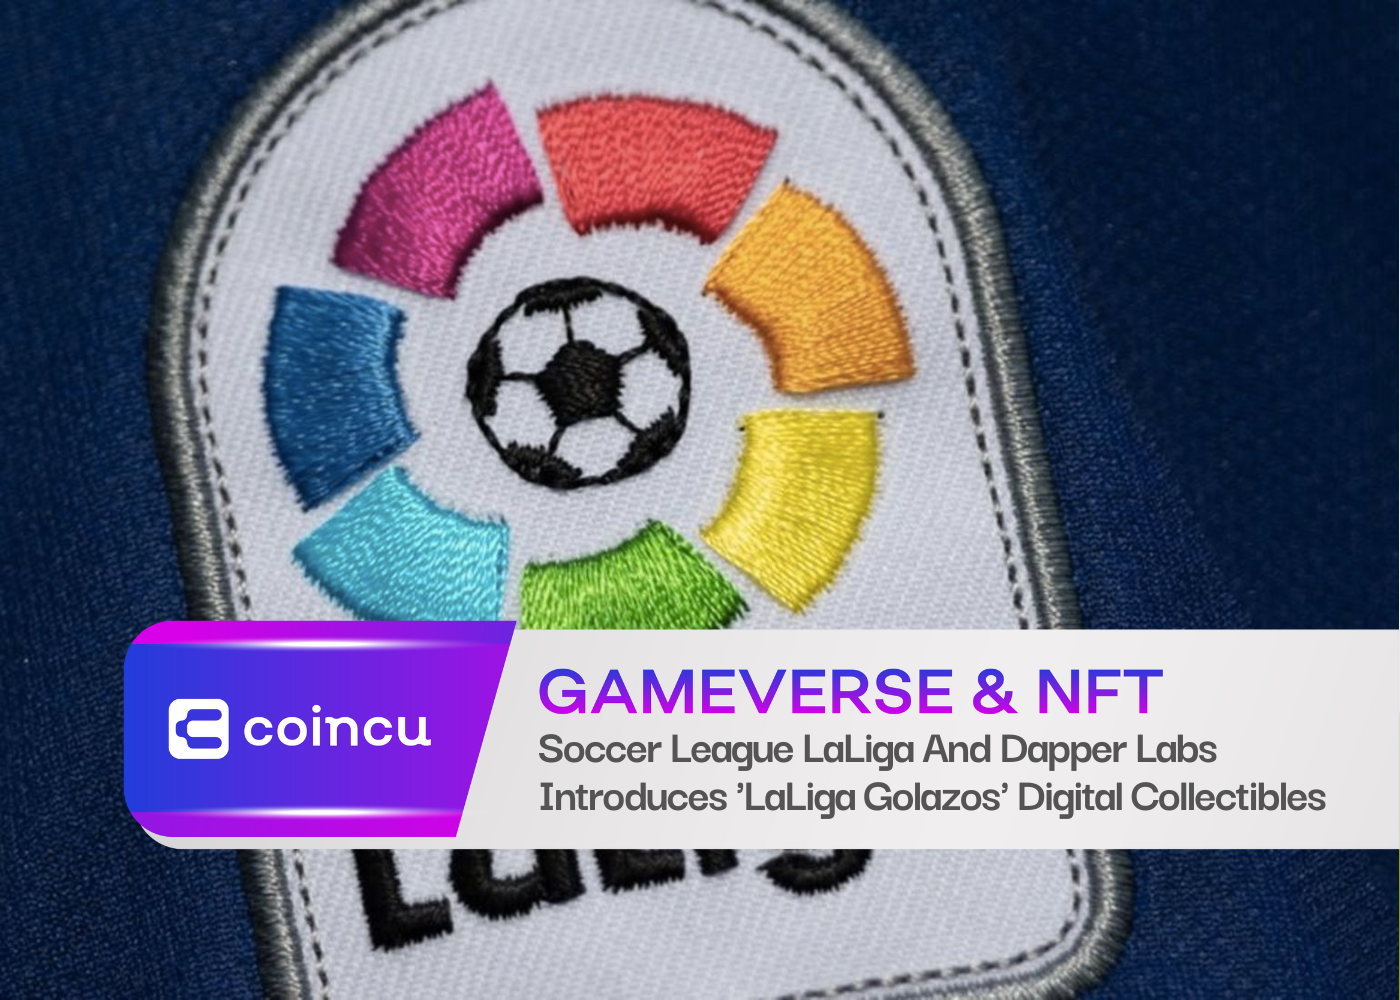 Soccer League LaLiga And Dapper Labs Introduces 'LaLiga Golazos' Digital Collectibles